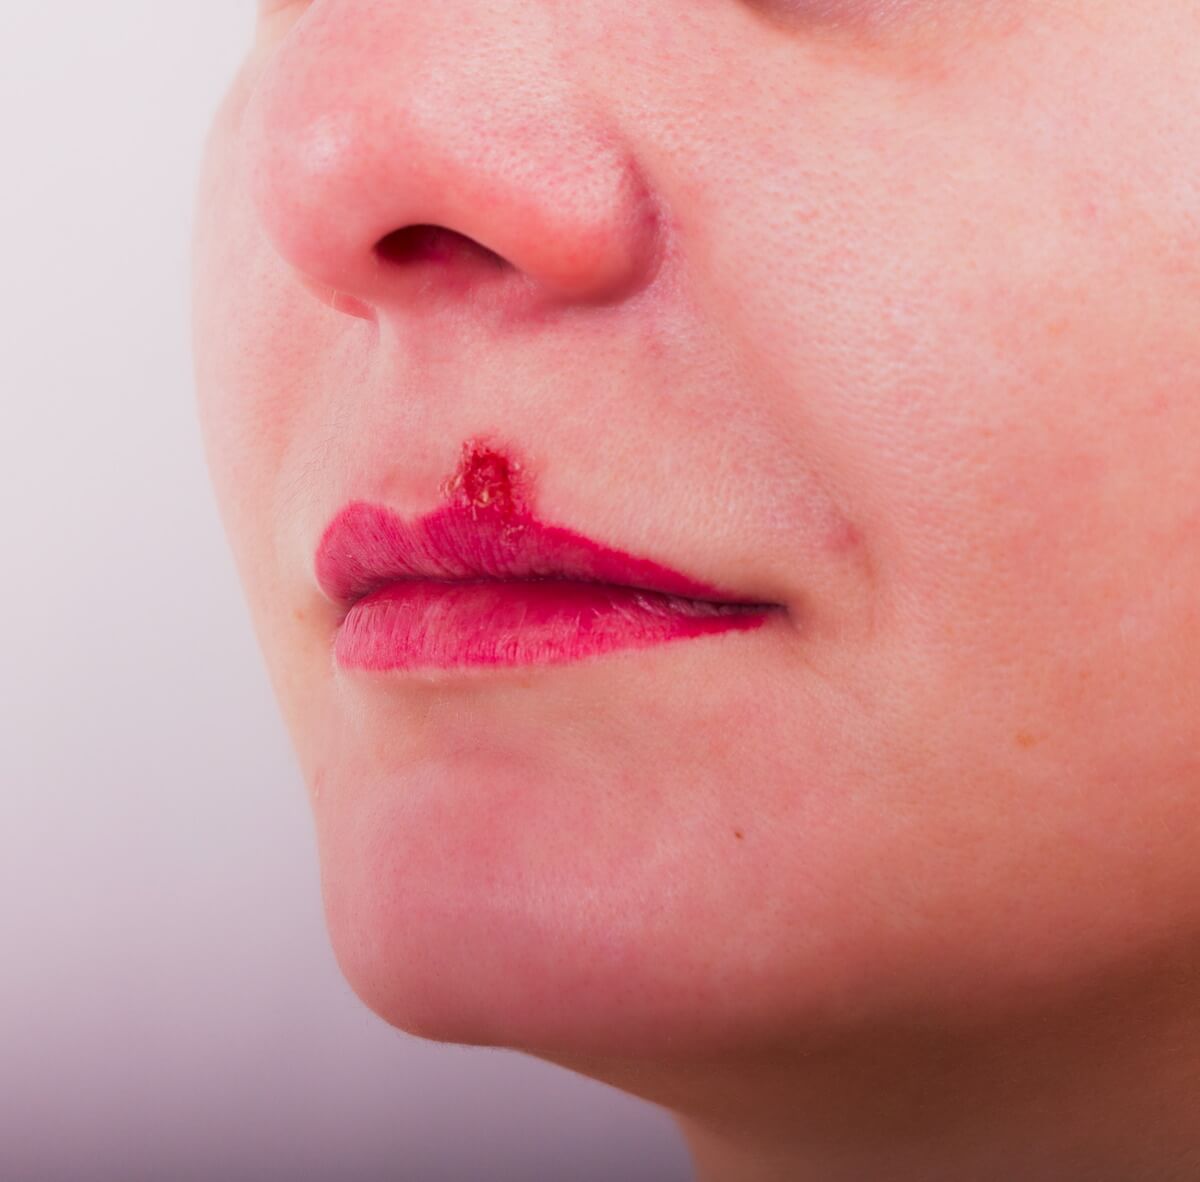 Herpes Simplex Ausbruch an der Lippe (Lippenherpes)